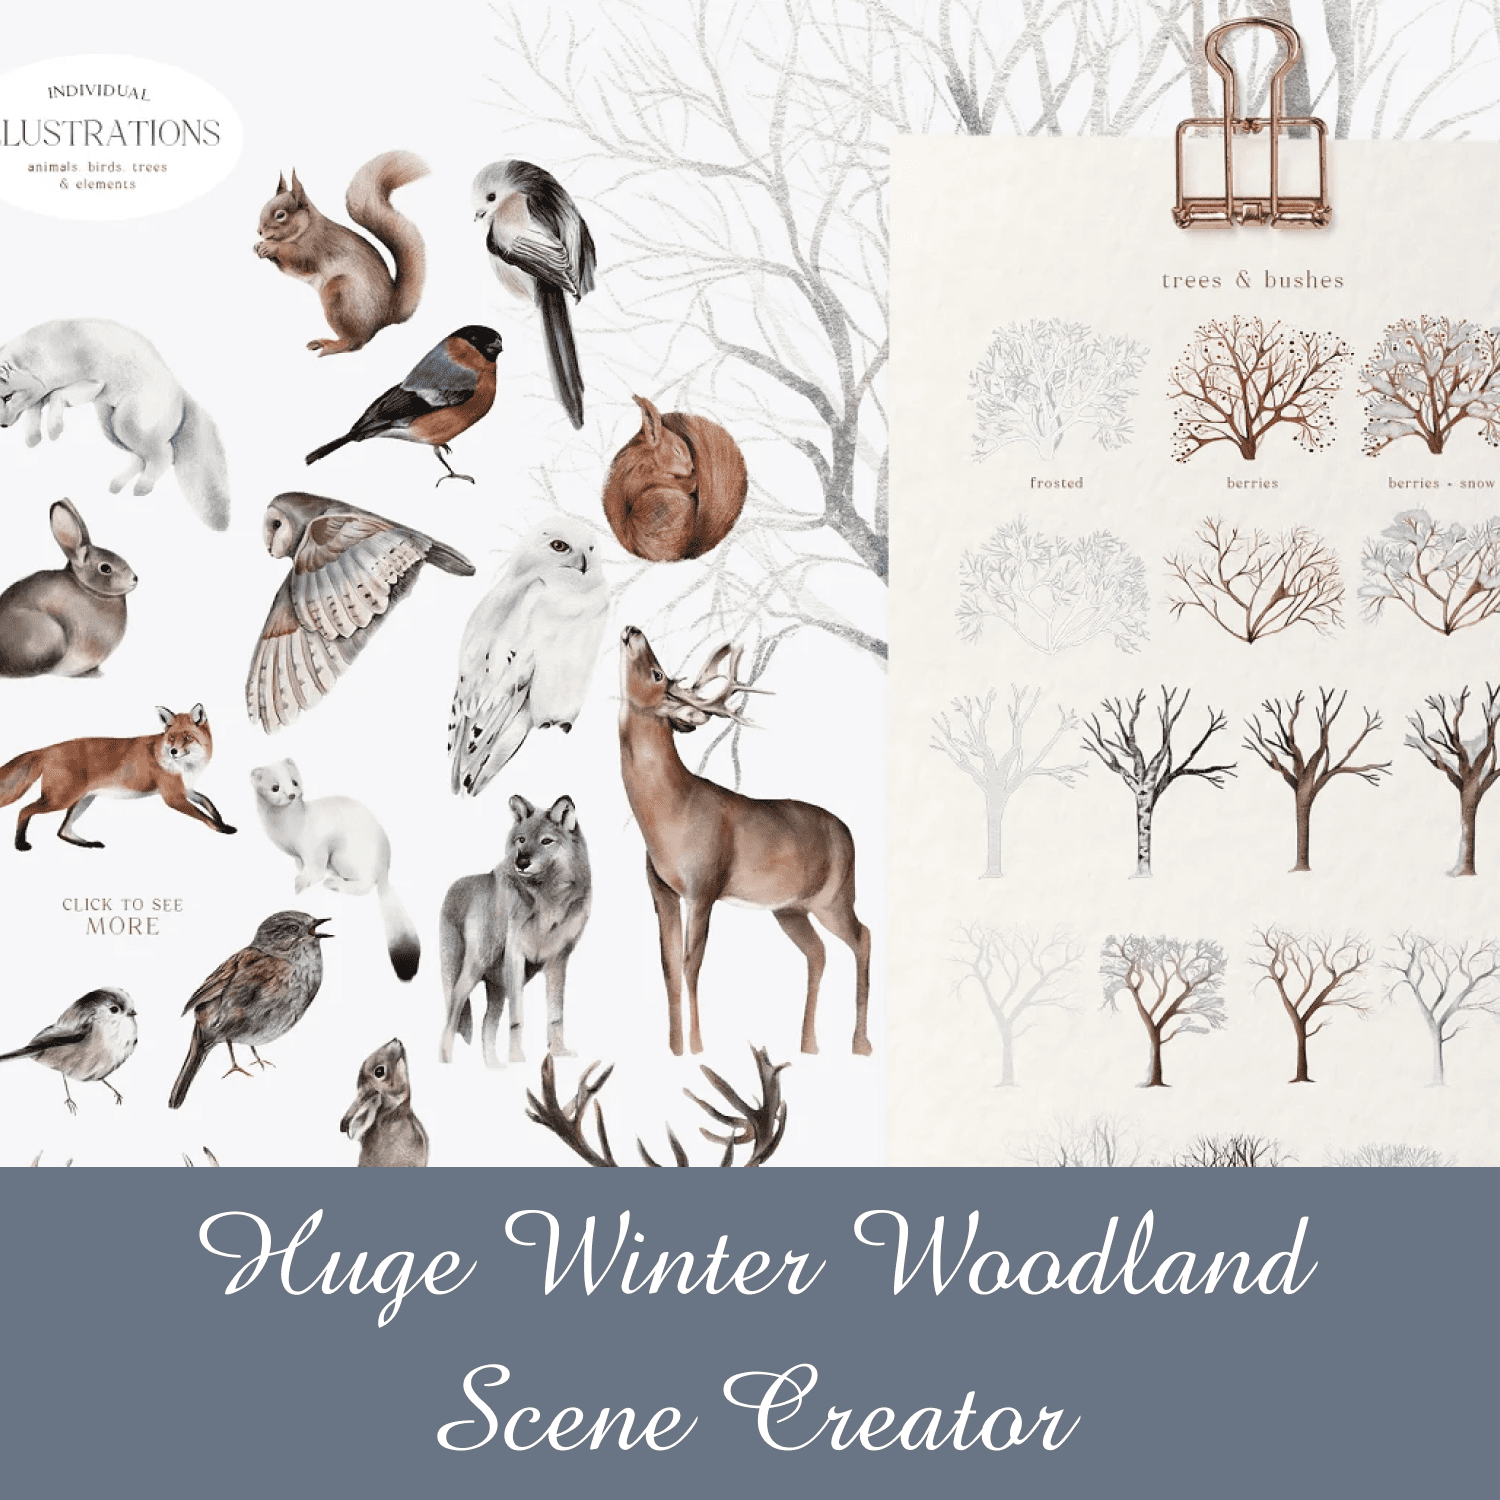 Huge Winter Woodland Scene Creator cover.